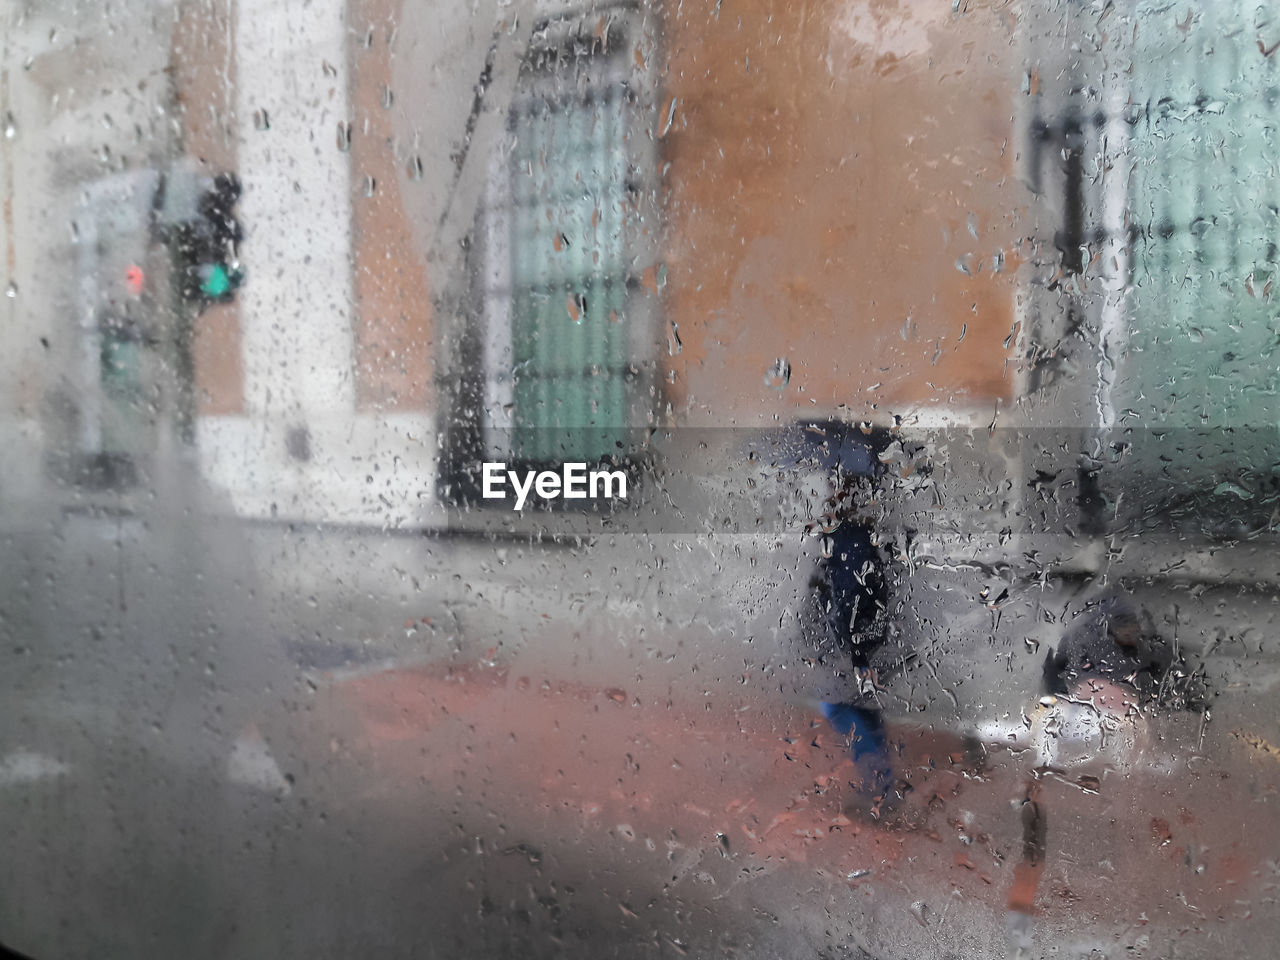 VIEW OF RAIN DROPS ON WINDOW